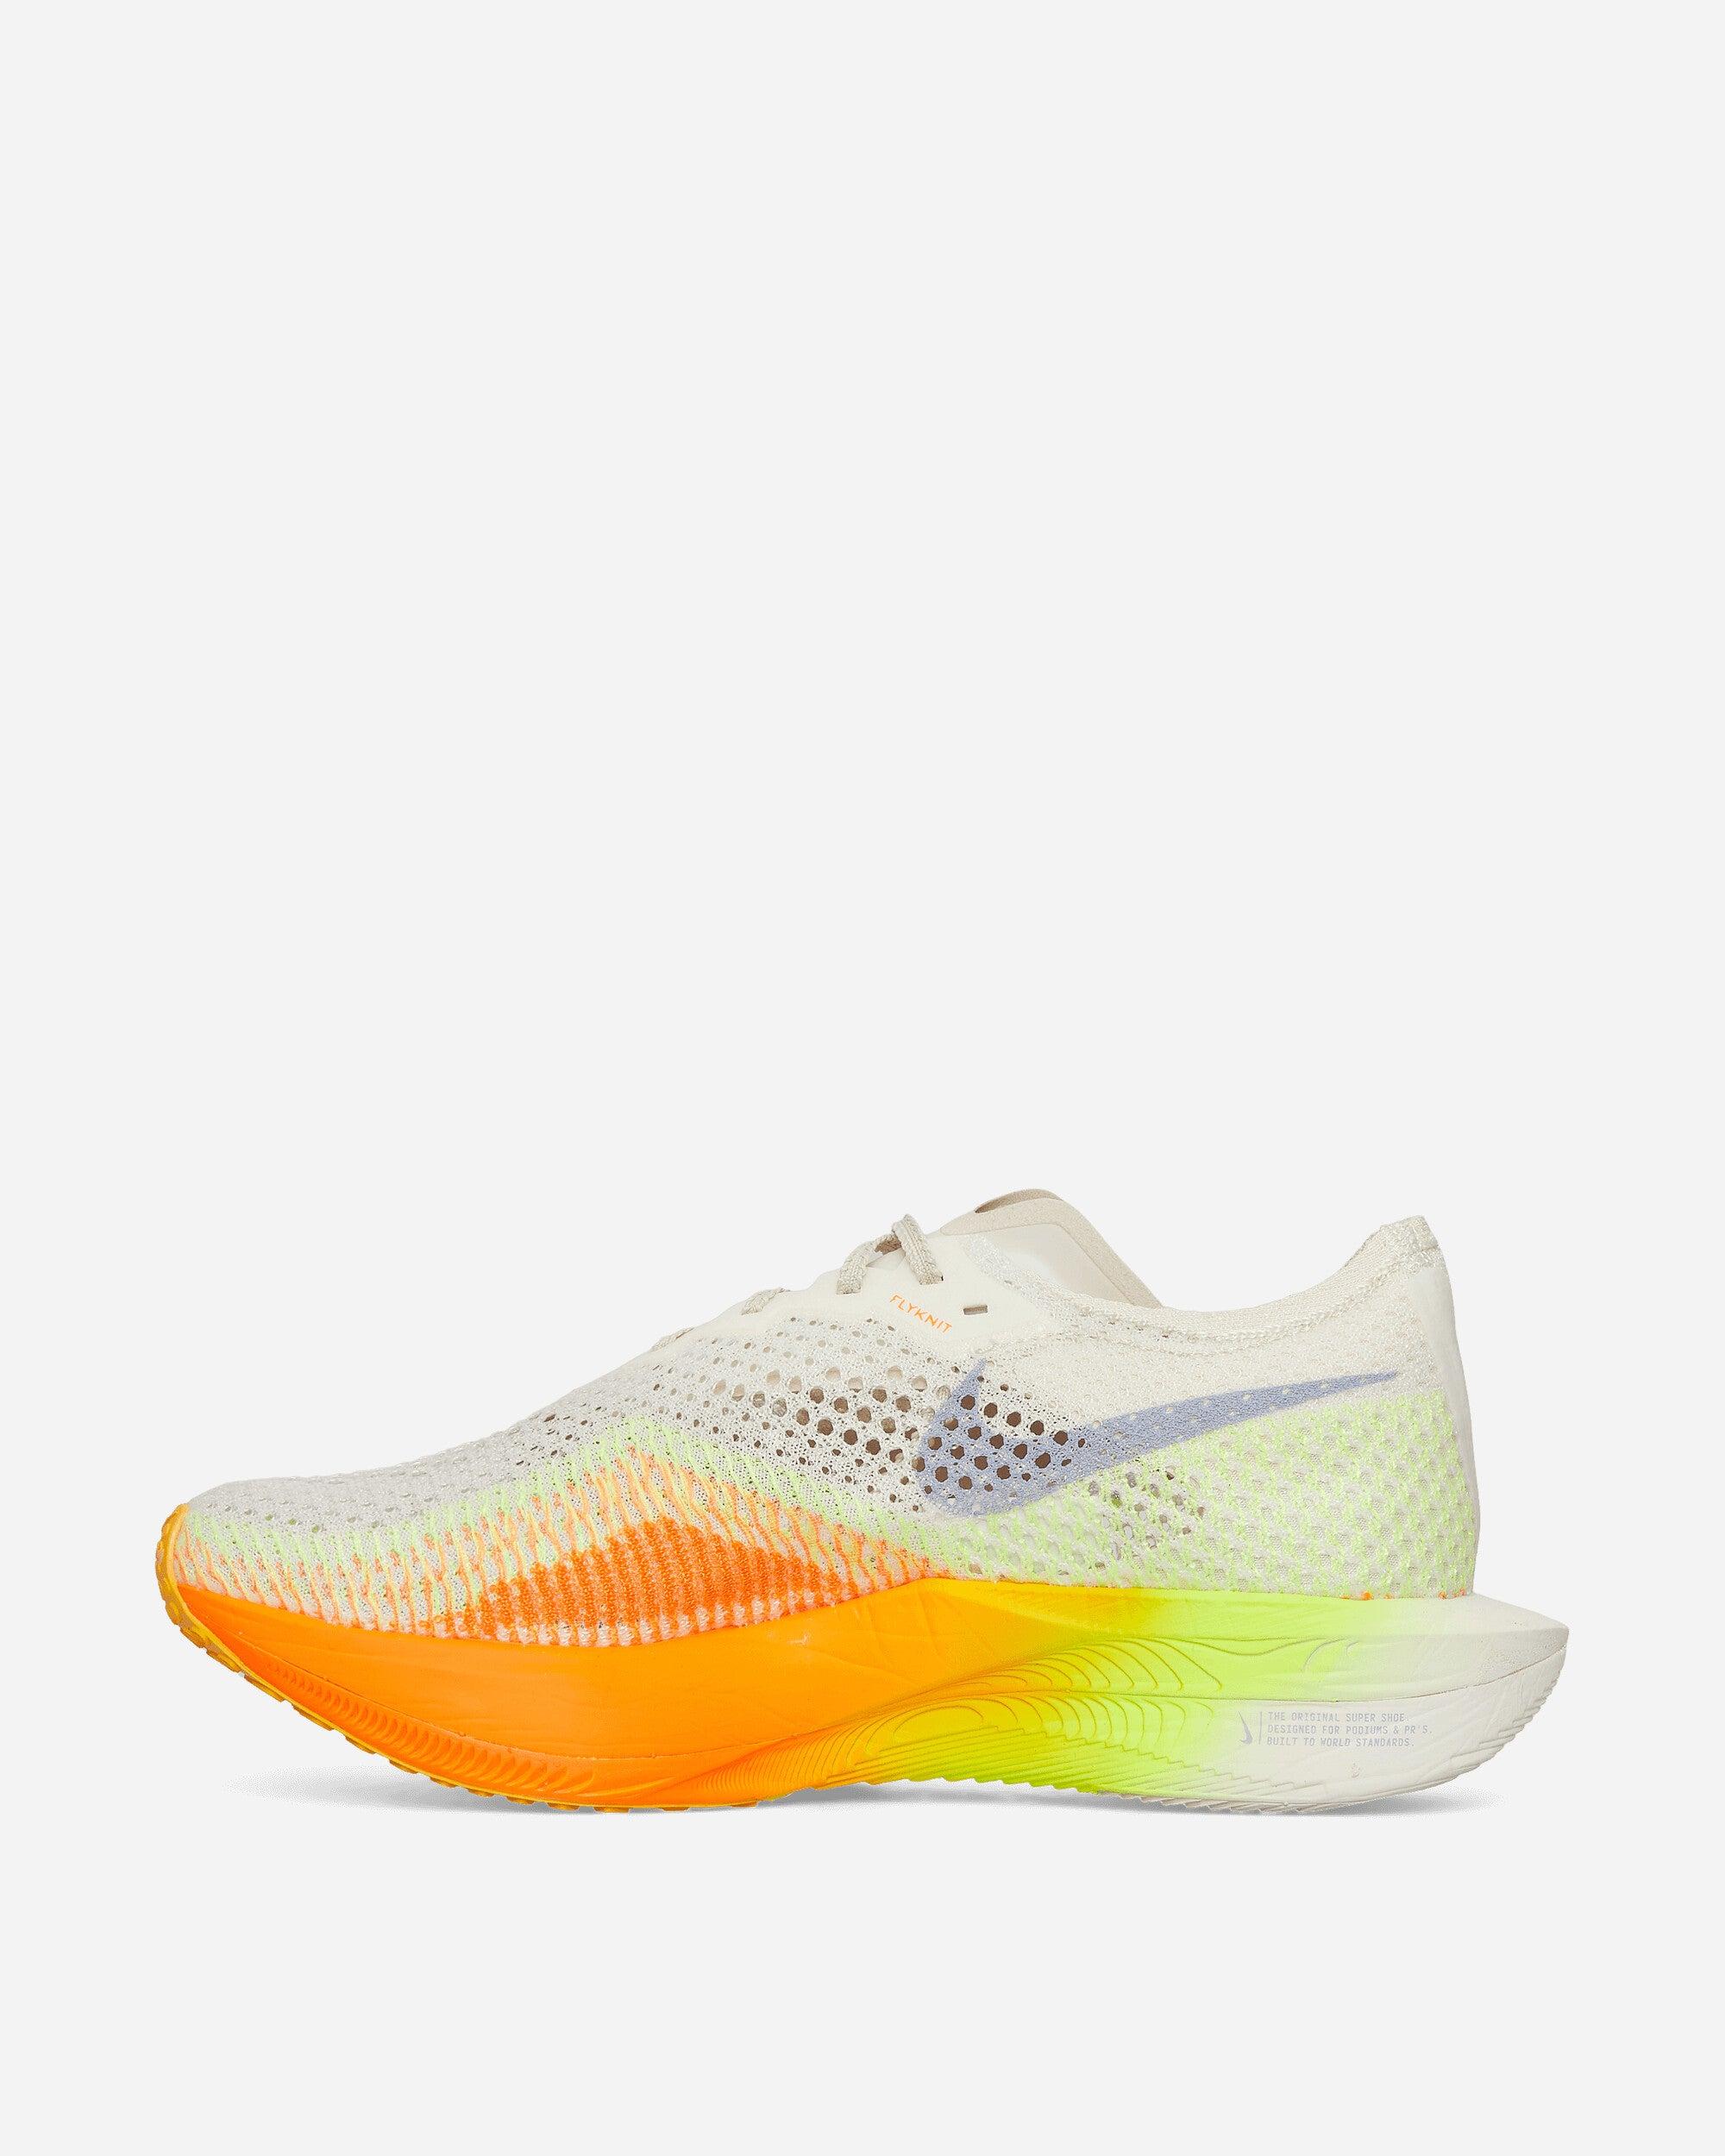 Nike ISPA Link Axis Link - White / Total Orange / Sonic Yellow 3